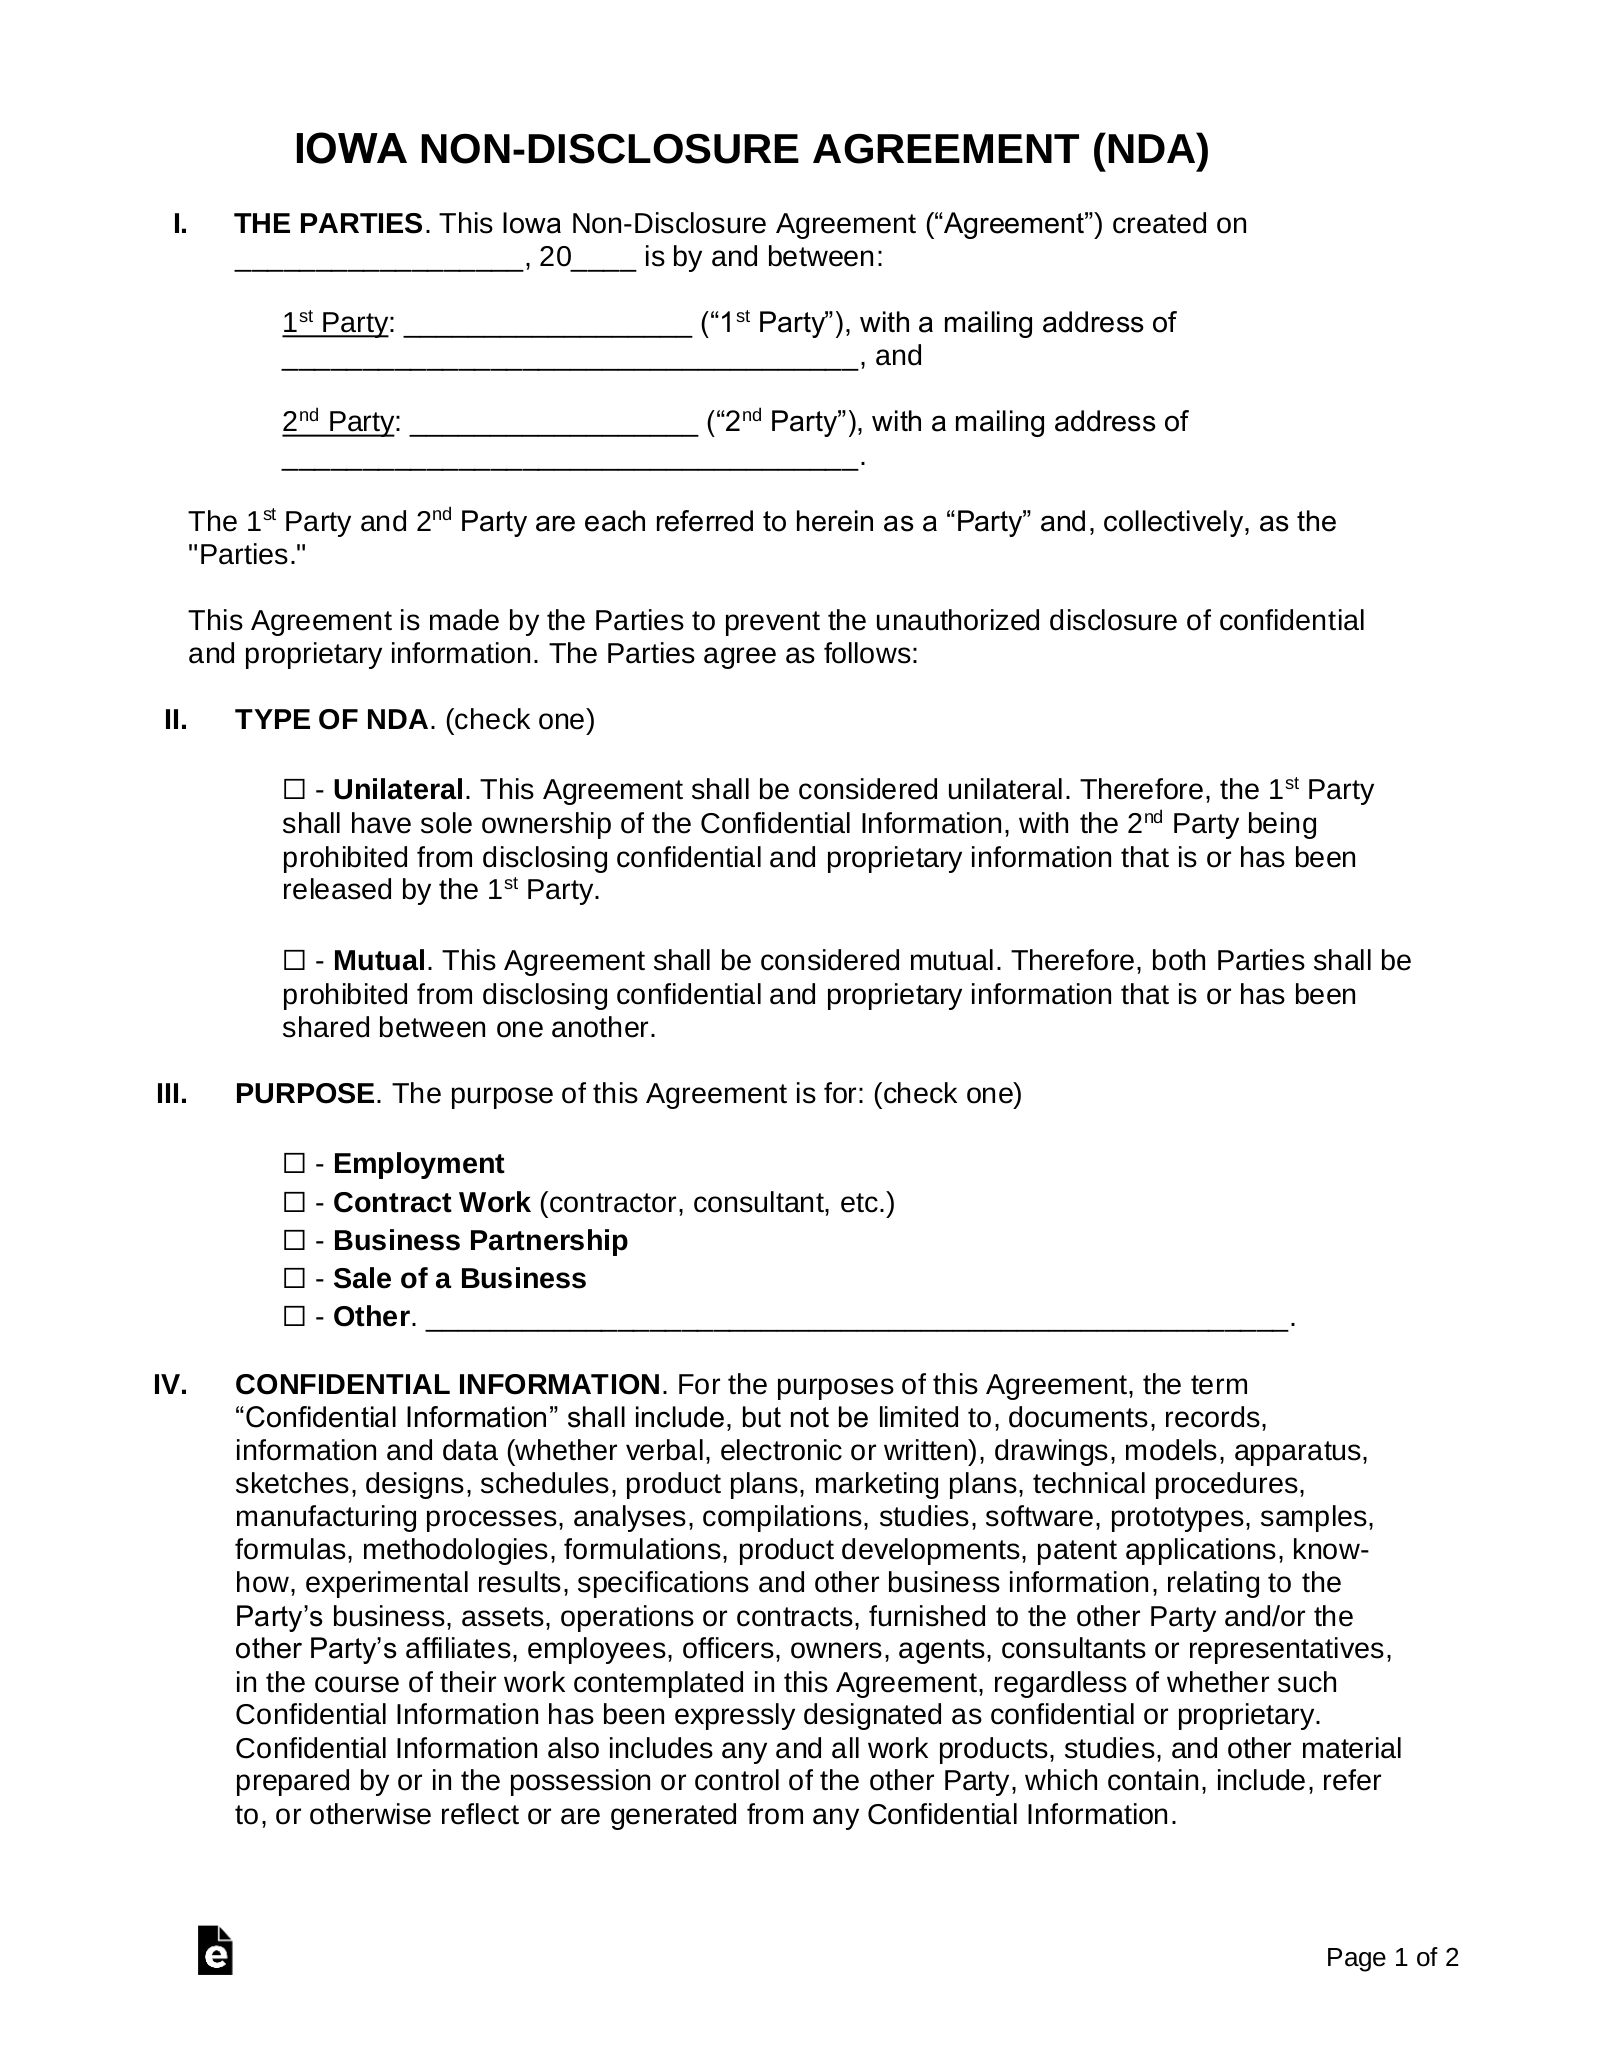 Iowa Non-Disclosure Agreement (NDA) Template